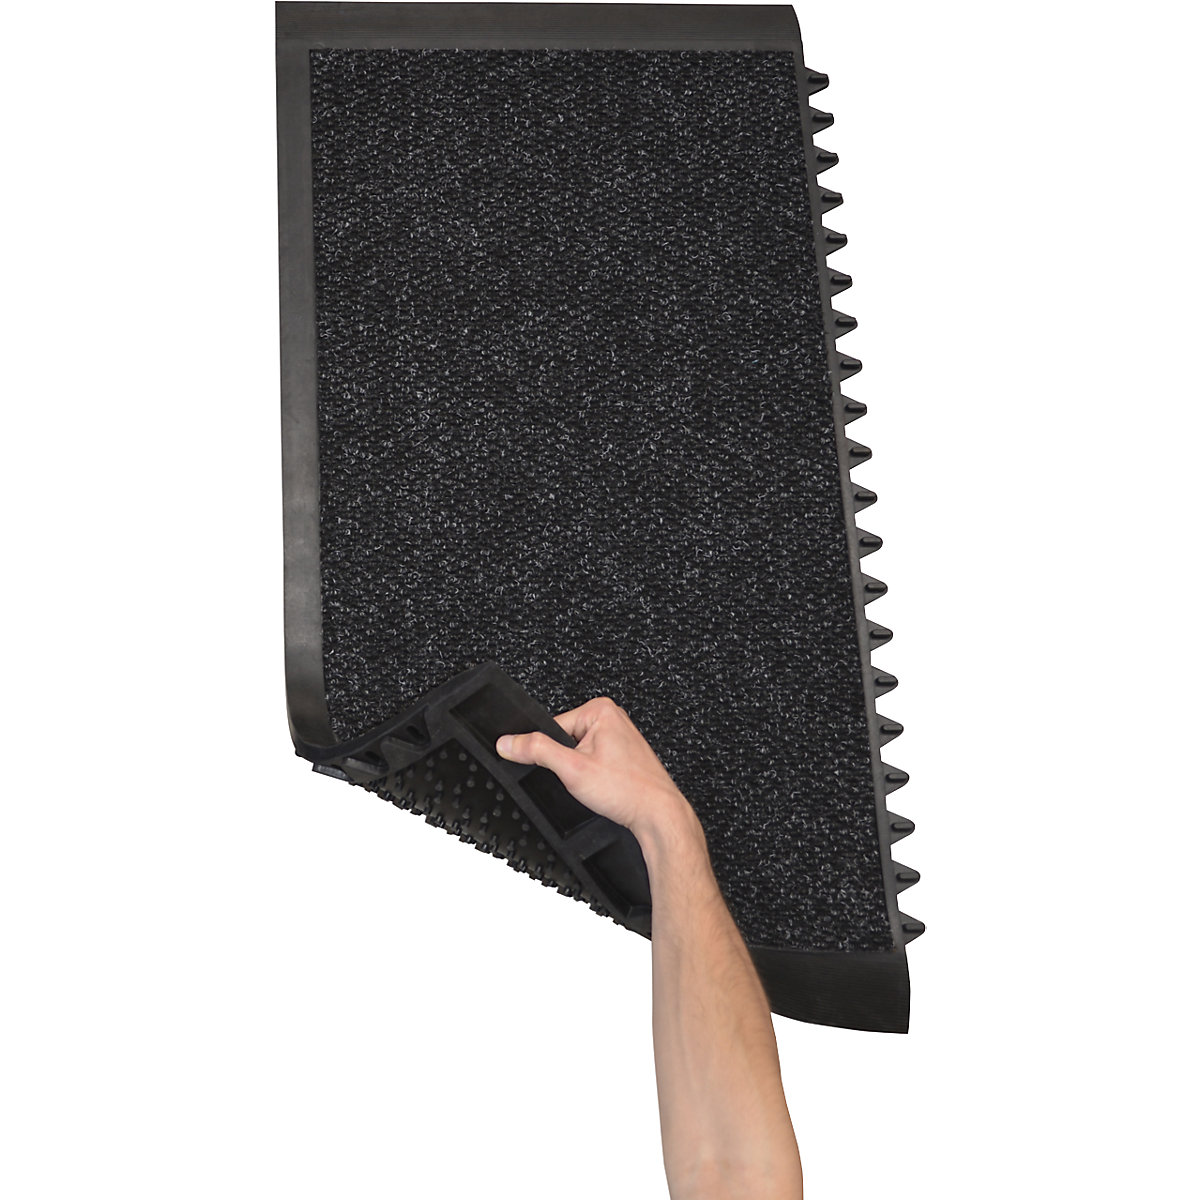 Additional carpet element for Sani-Master™ entrance matting – NOTRAX